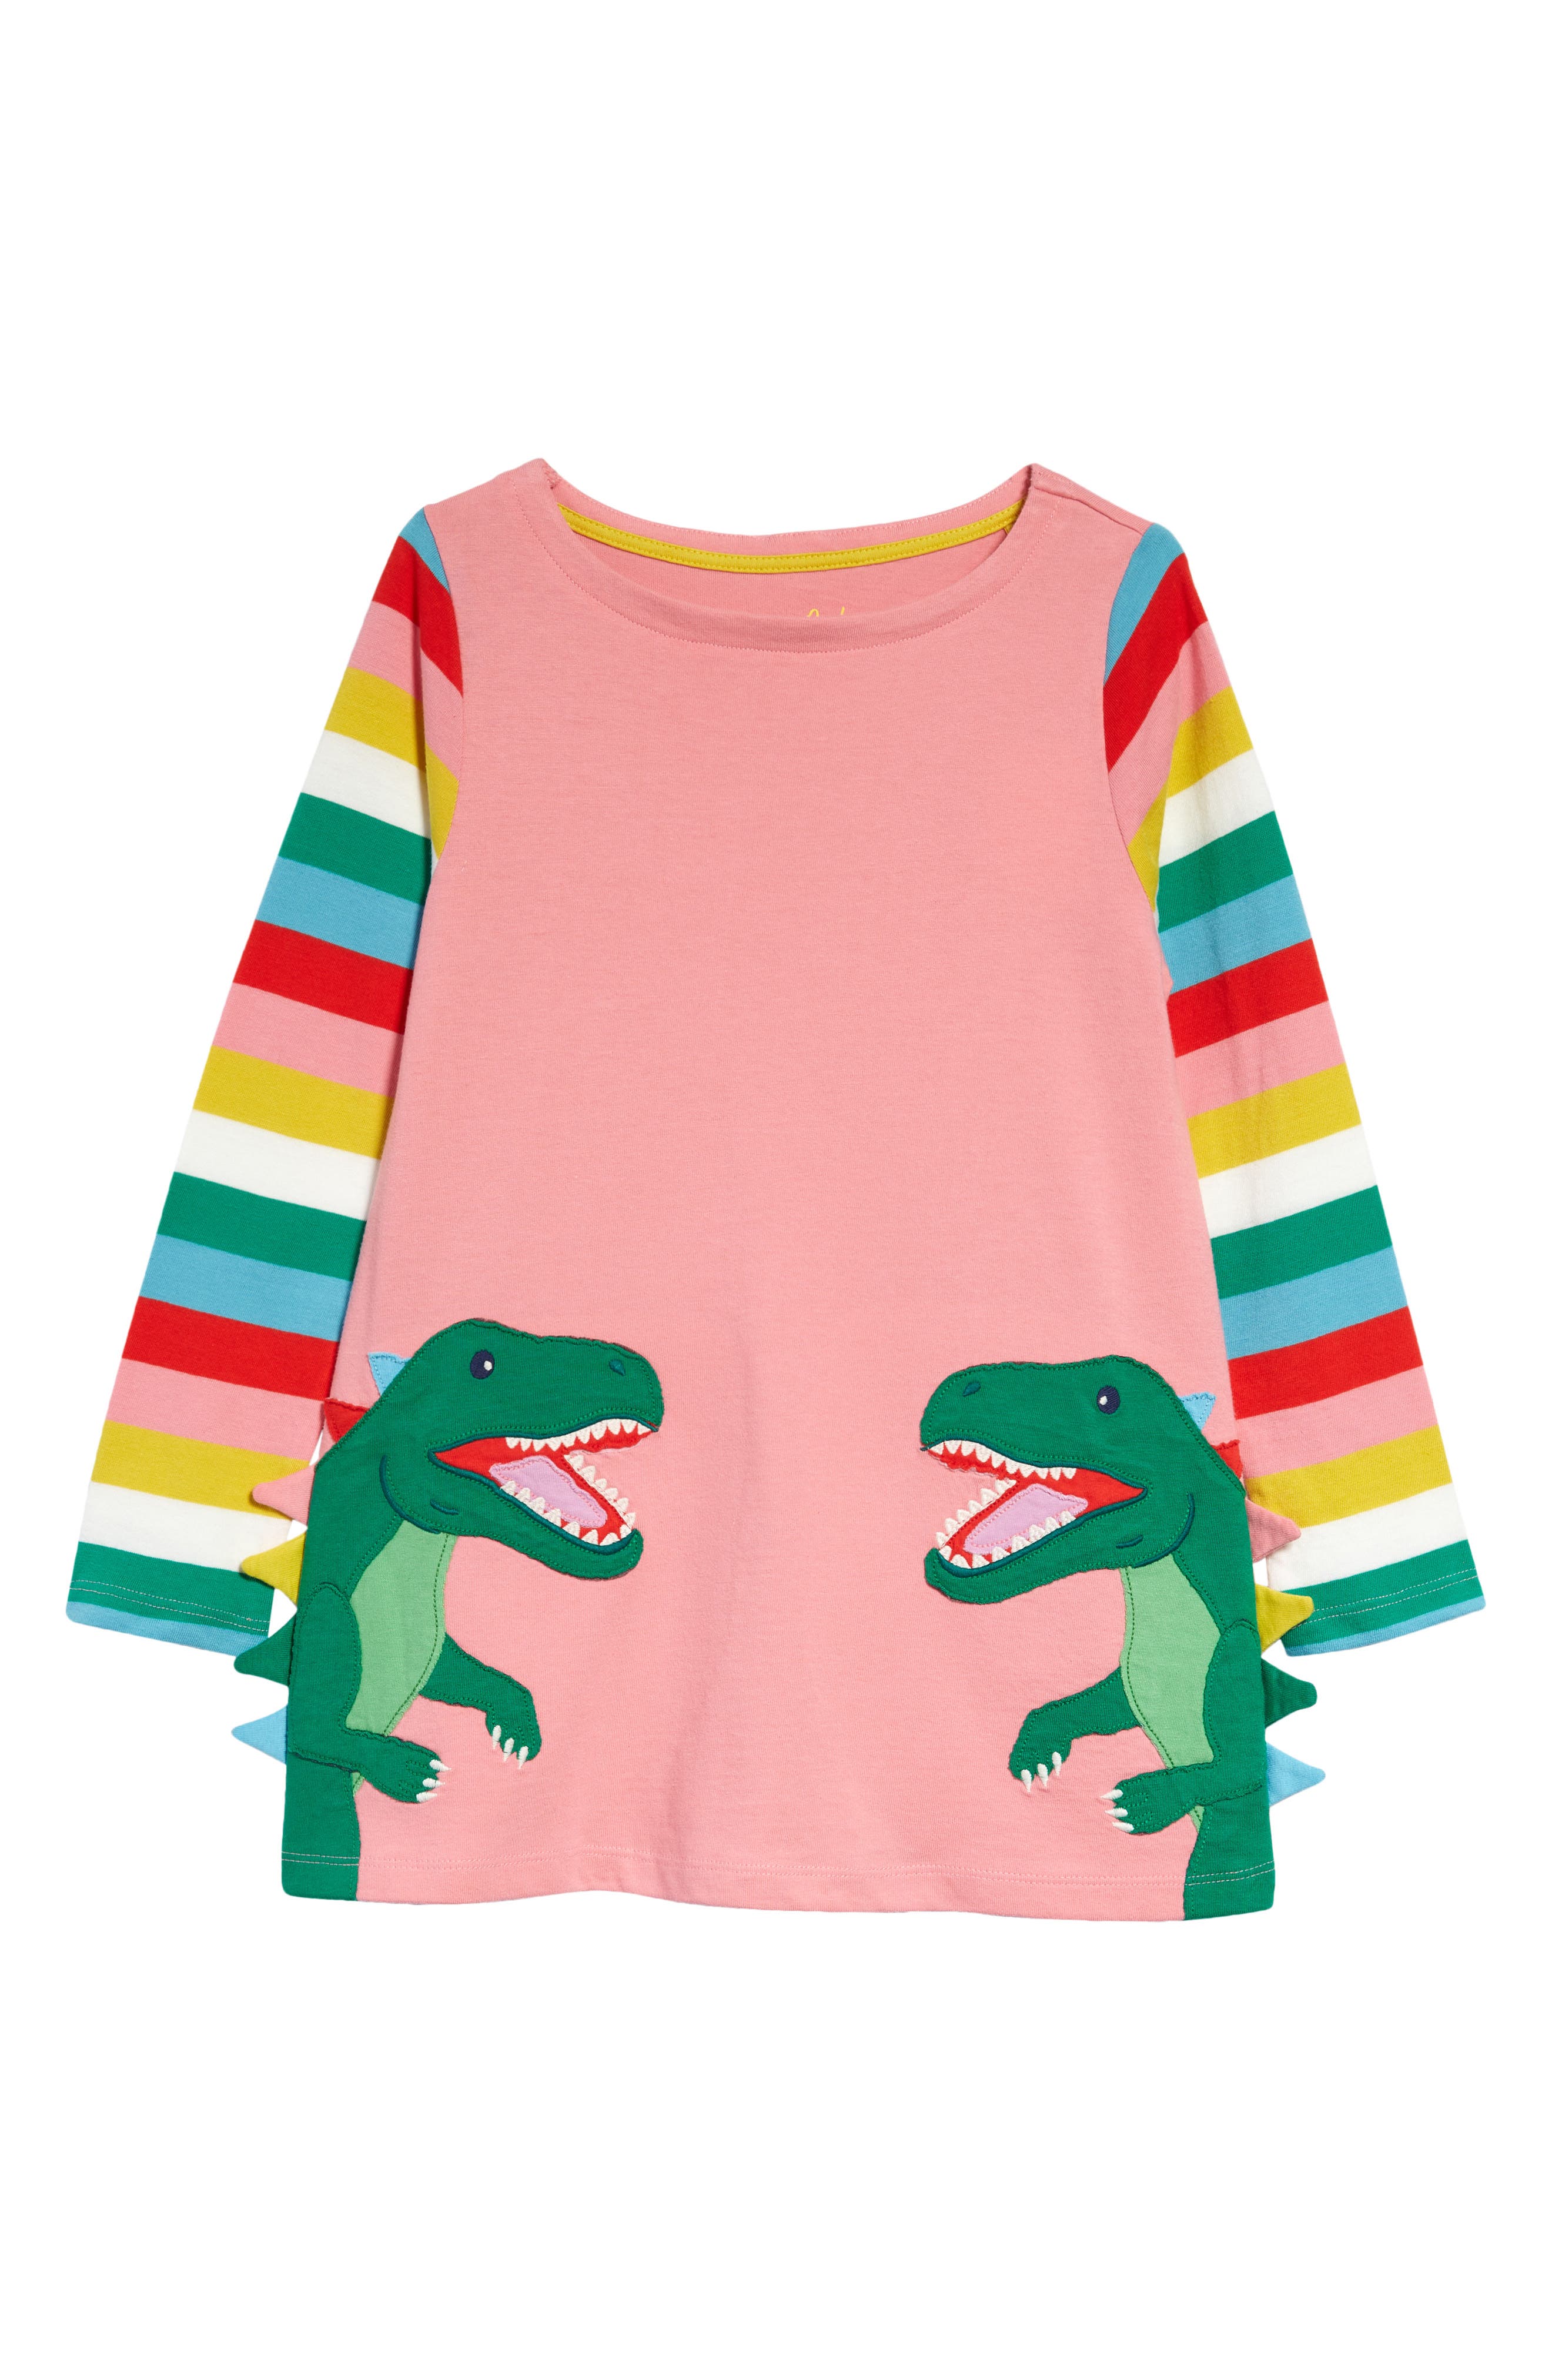 Kids Dinosaur Appliqué Cotton Tunic Top in Pink Lemonade Dinosaur at Nordstrom Nordstrom Clothing Tunics 